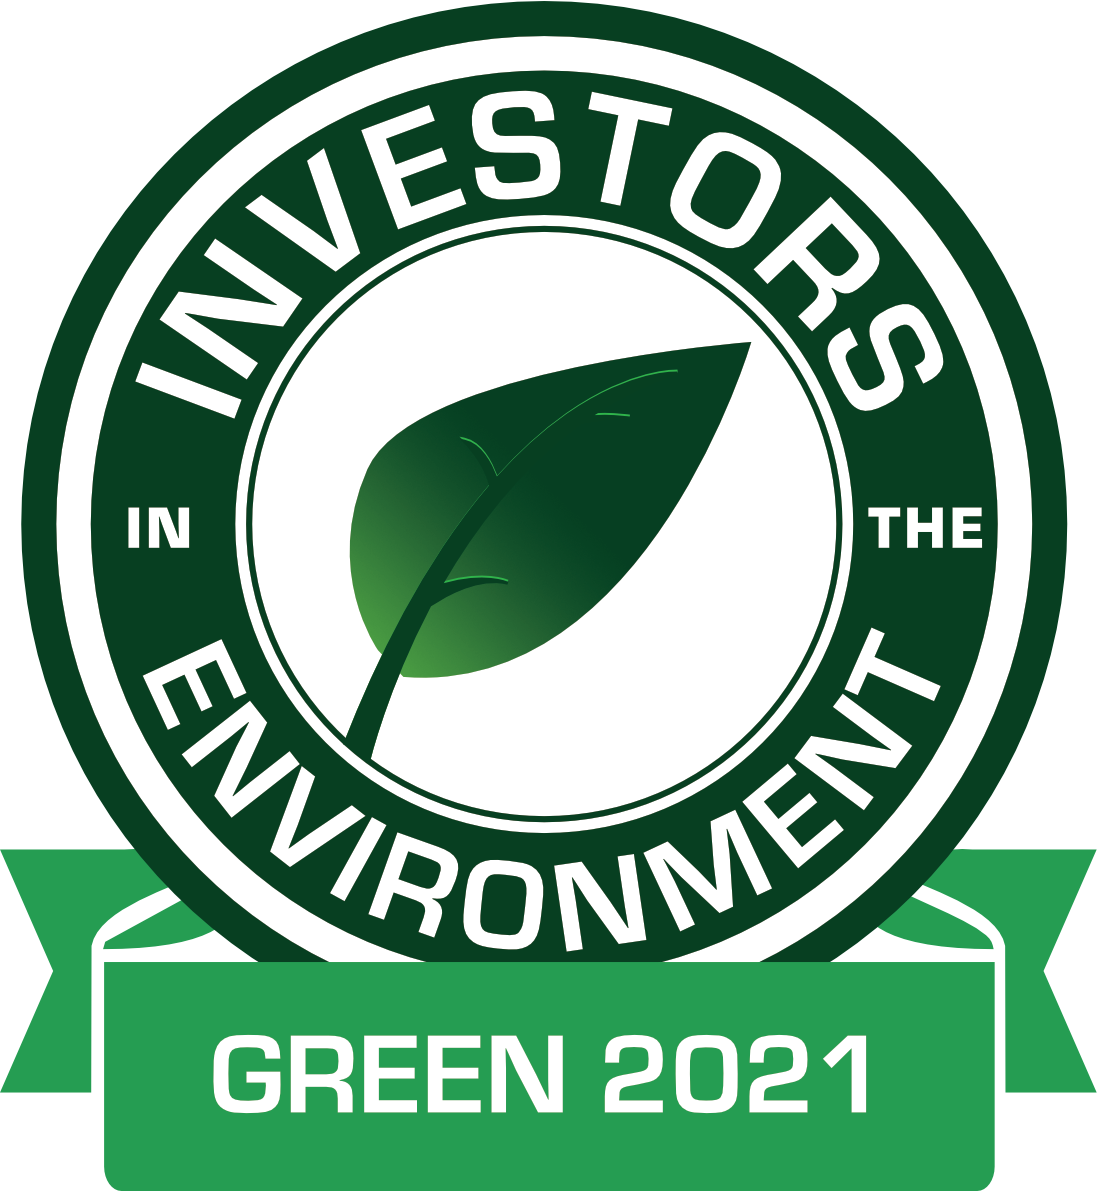 Green Award 2021 Investors in the environment